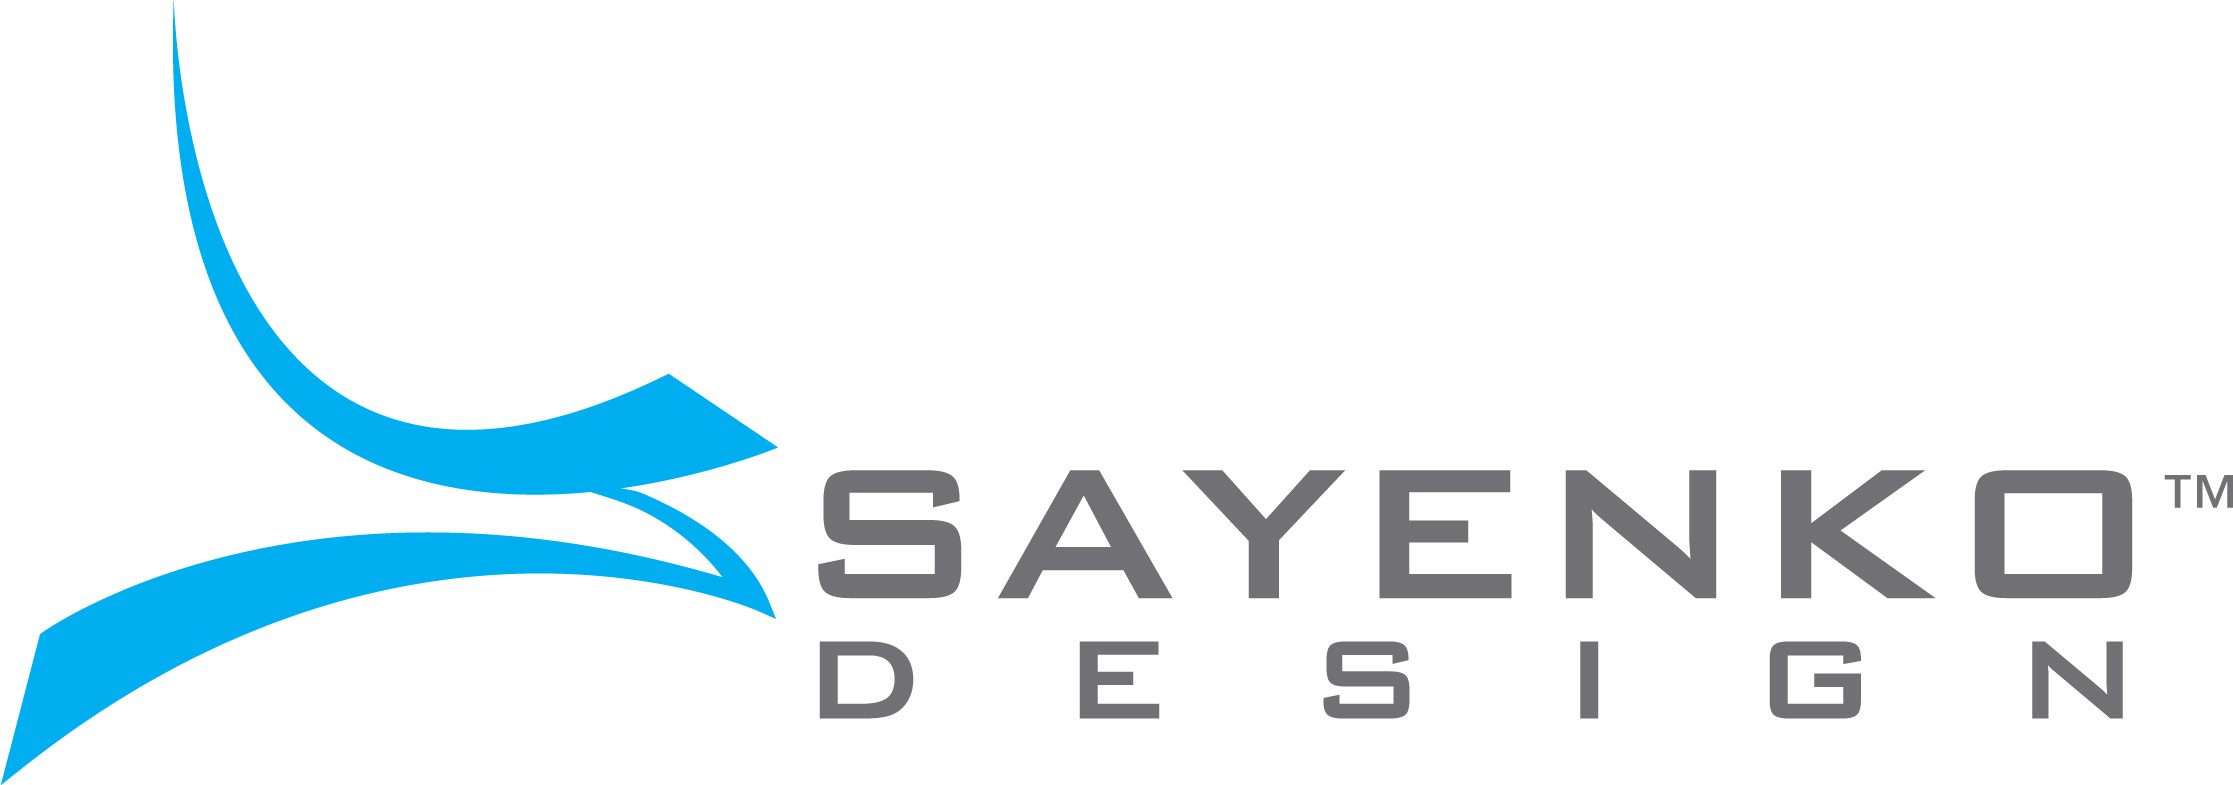 Best Seattle Web Design Agency Logo: Sayenko Design